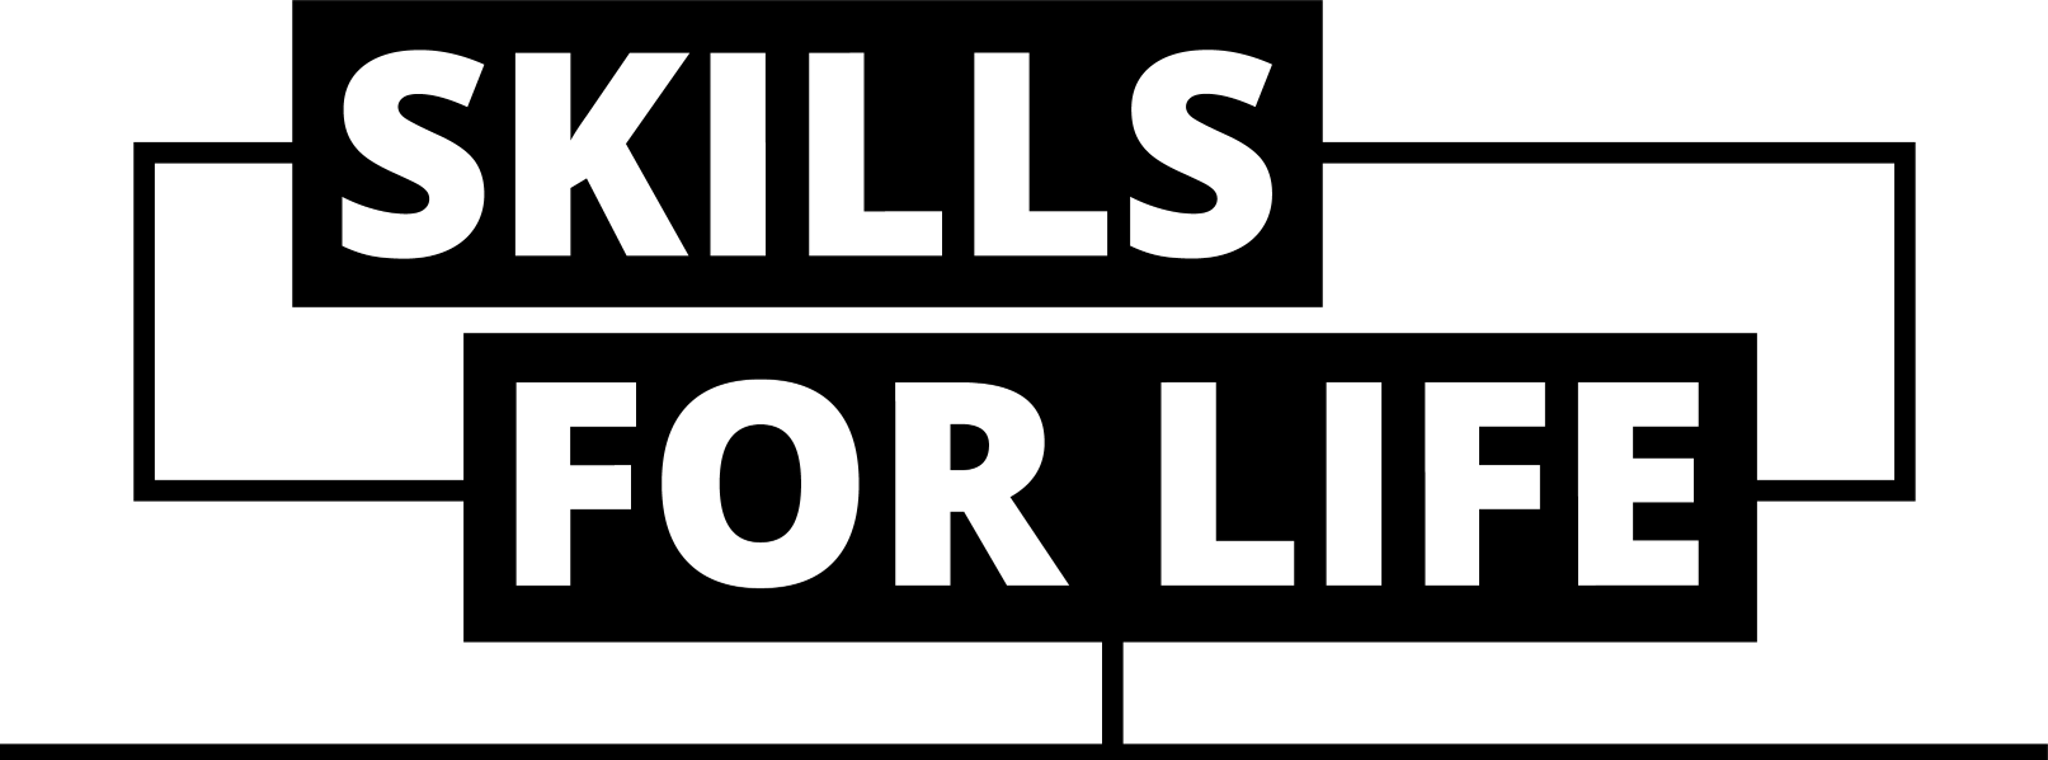 UK Government Skills for Life Apprenticeships logo